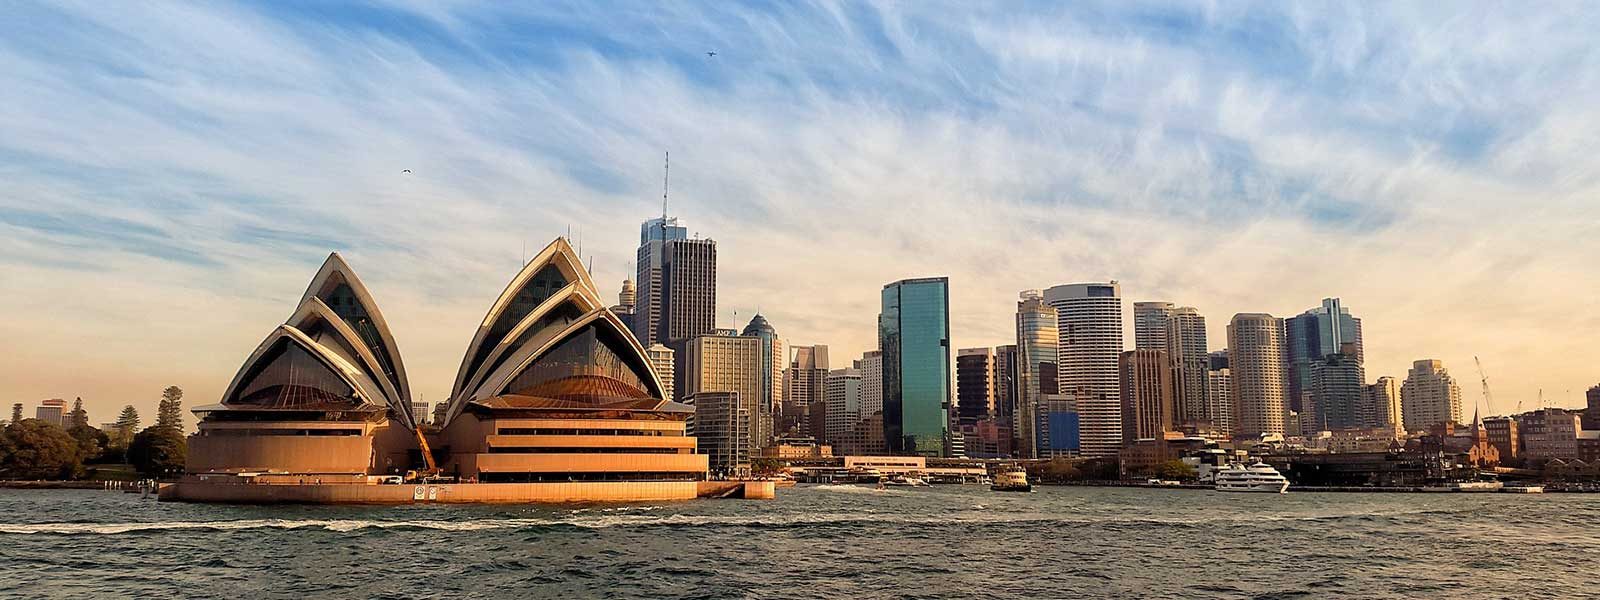 De prachtige skyline van Sydney